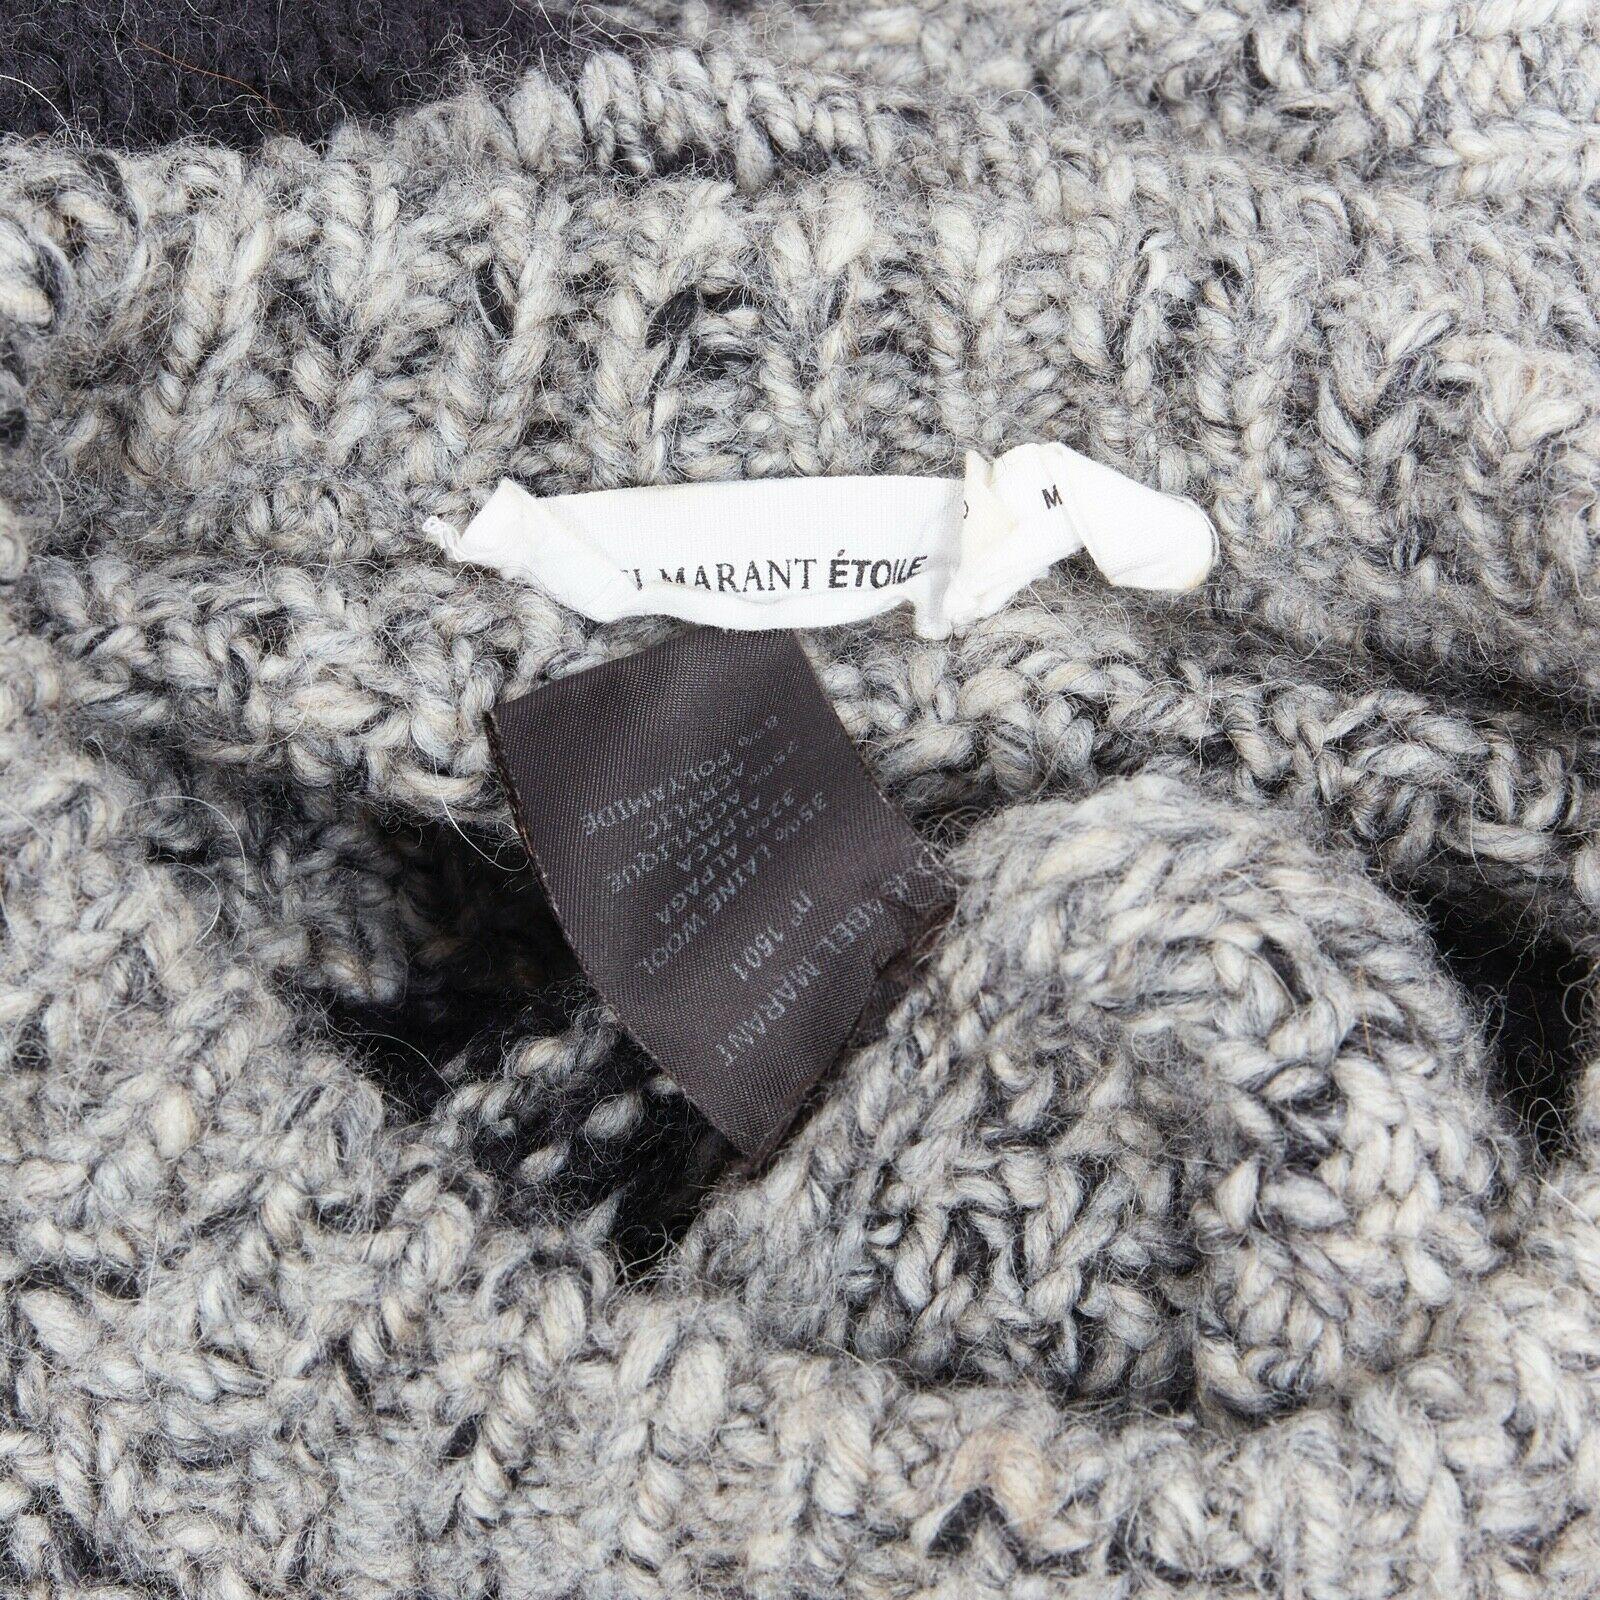 ISABEL MARANT ETOILE grey wool blend knit ski pullover sweater jumper FR36 S 4